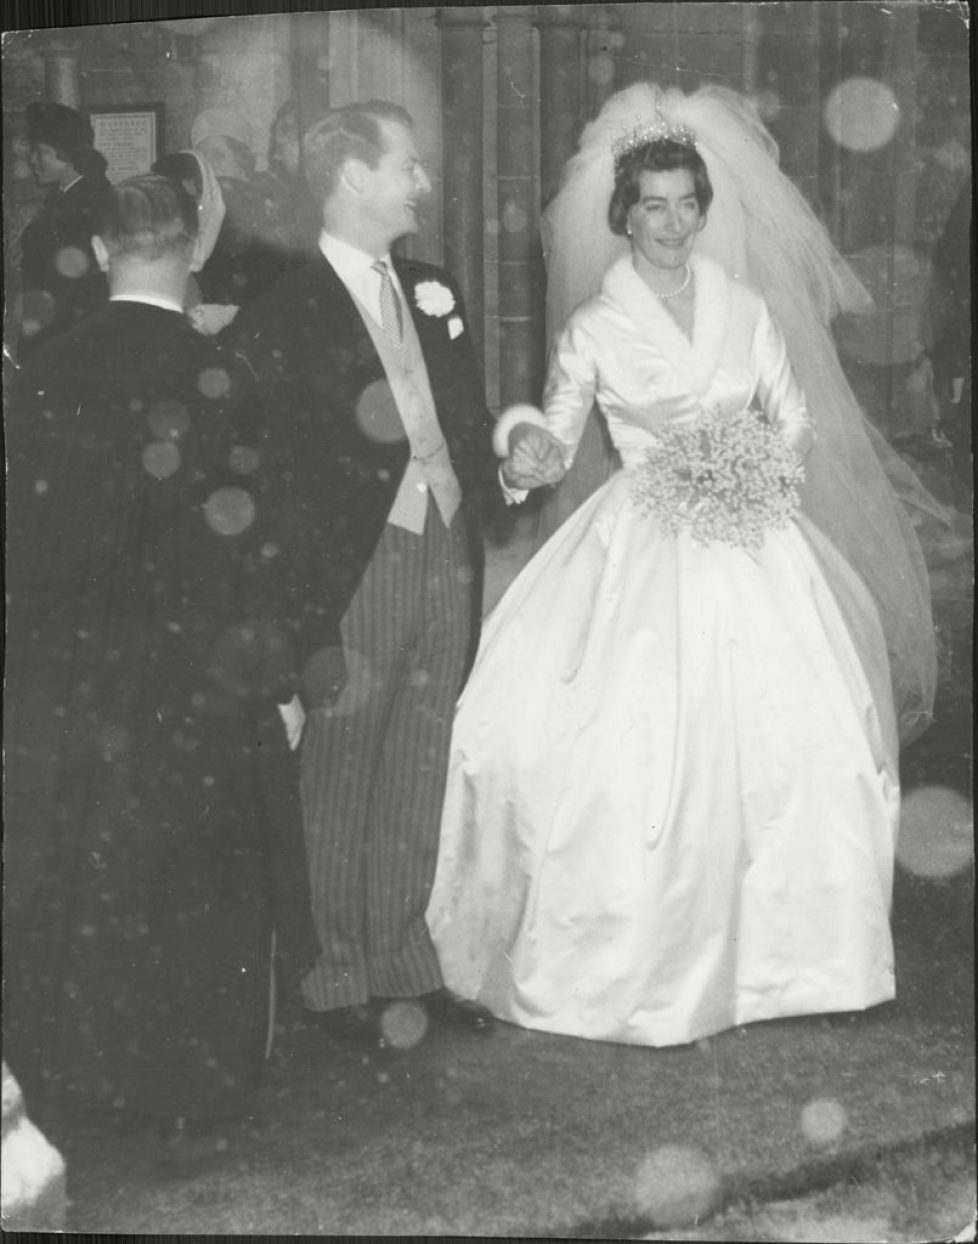 on-wedding-day-jan-1960-shutterstock_editorial_1933005a_huge